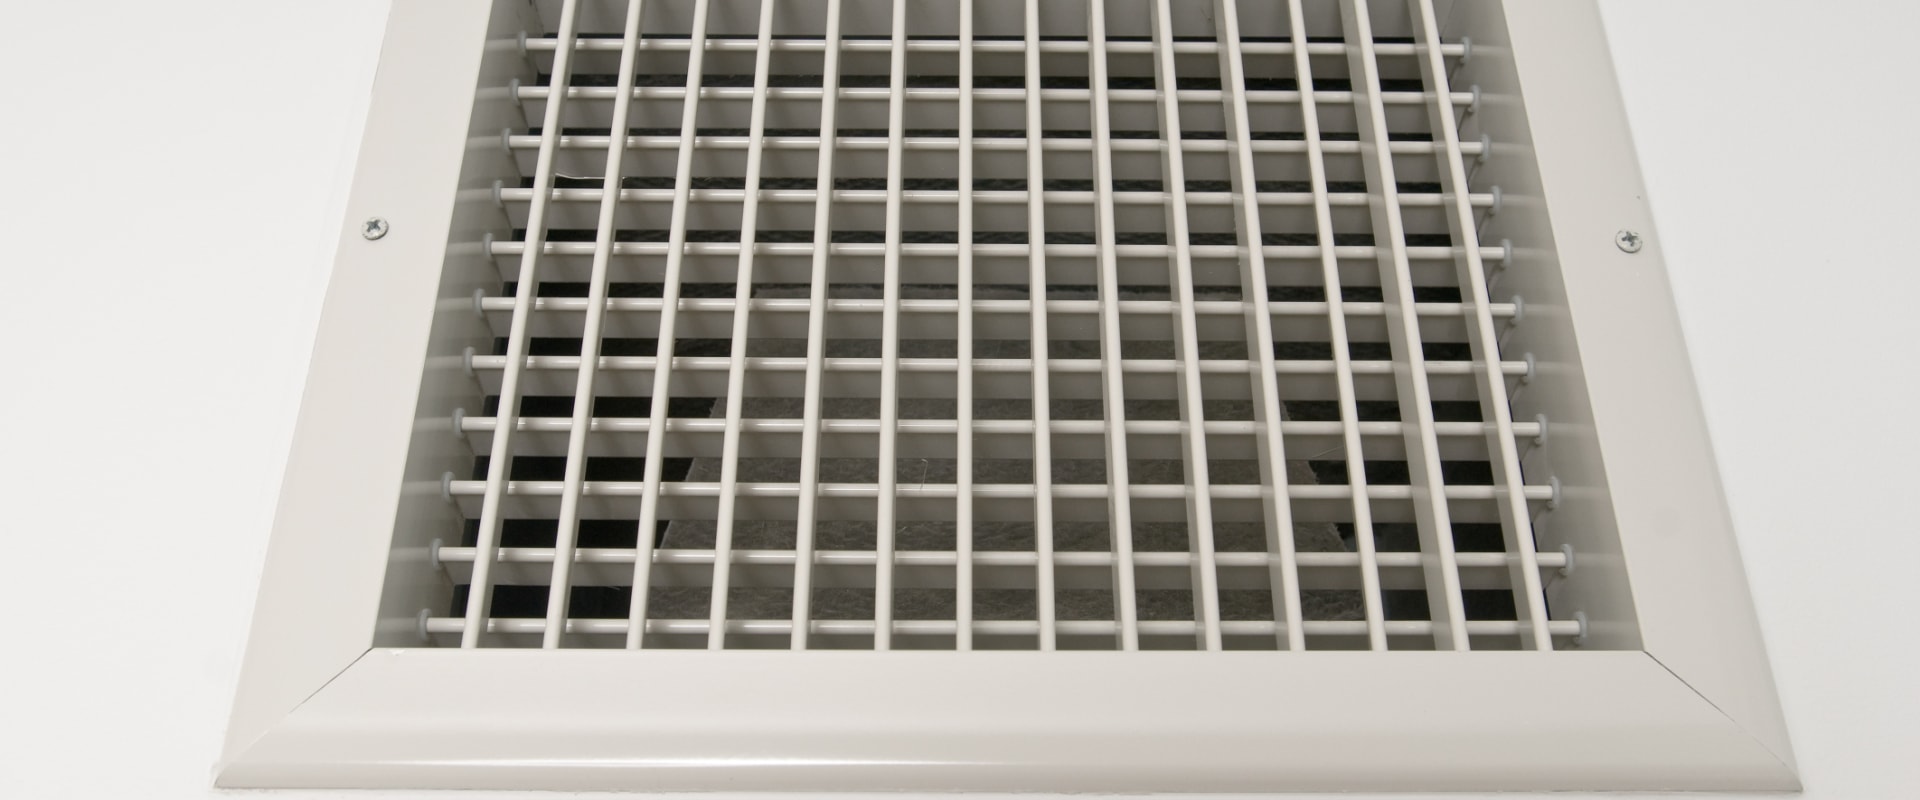 Can I Use a 20x25x1 Air Filter in My Furnace or AC Unit? - A Comprehensive Guide